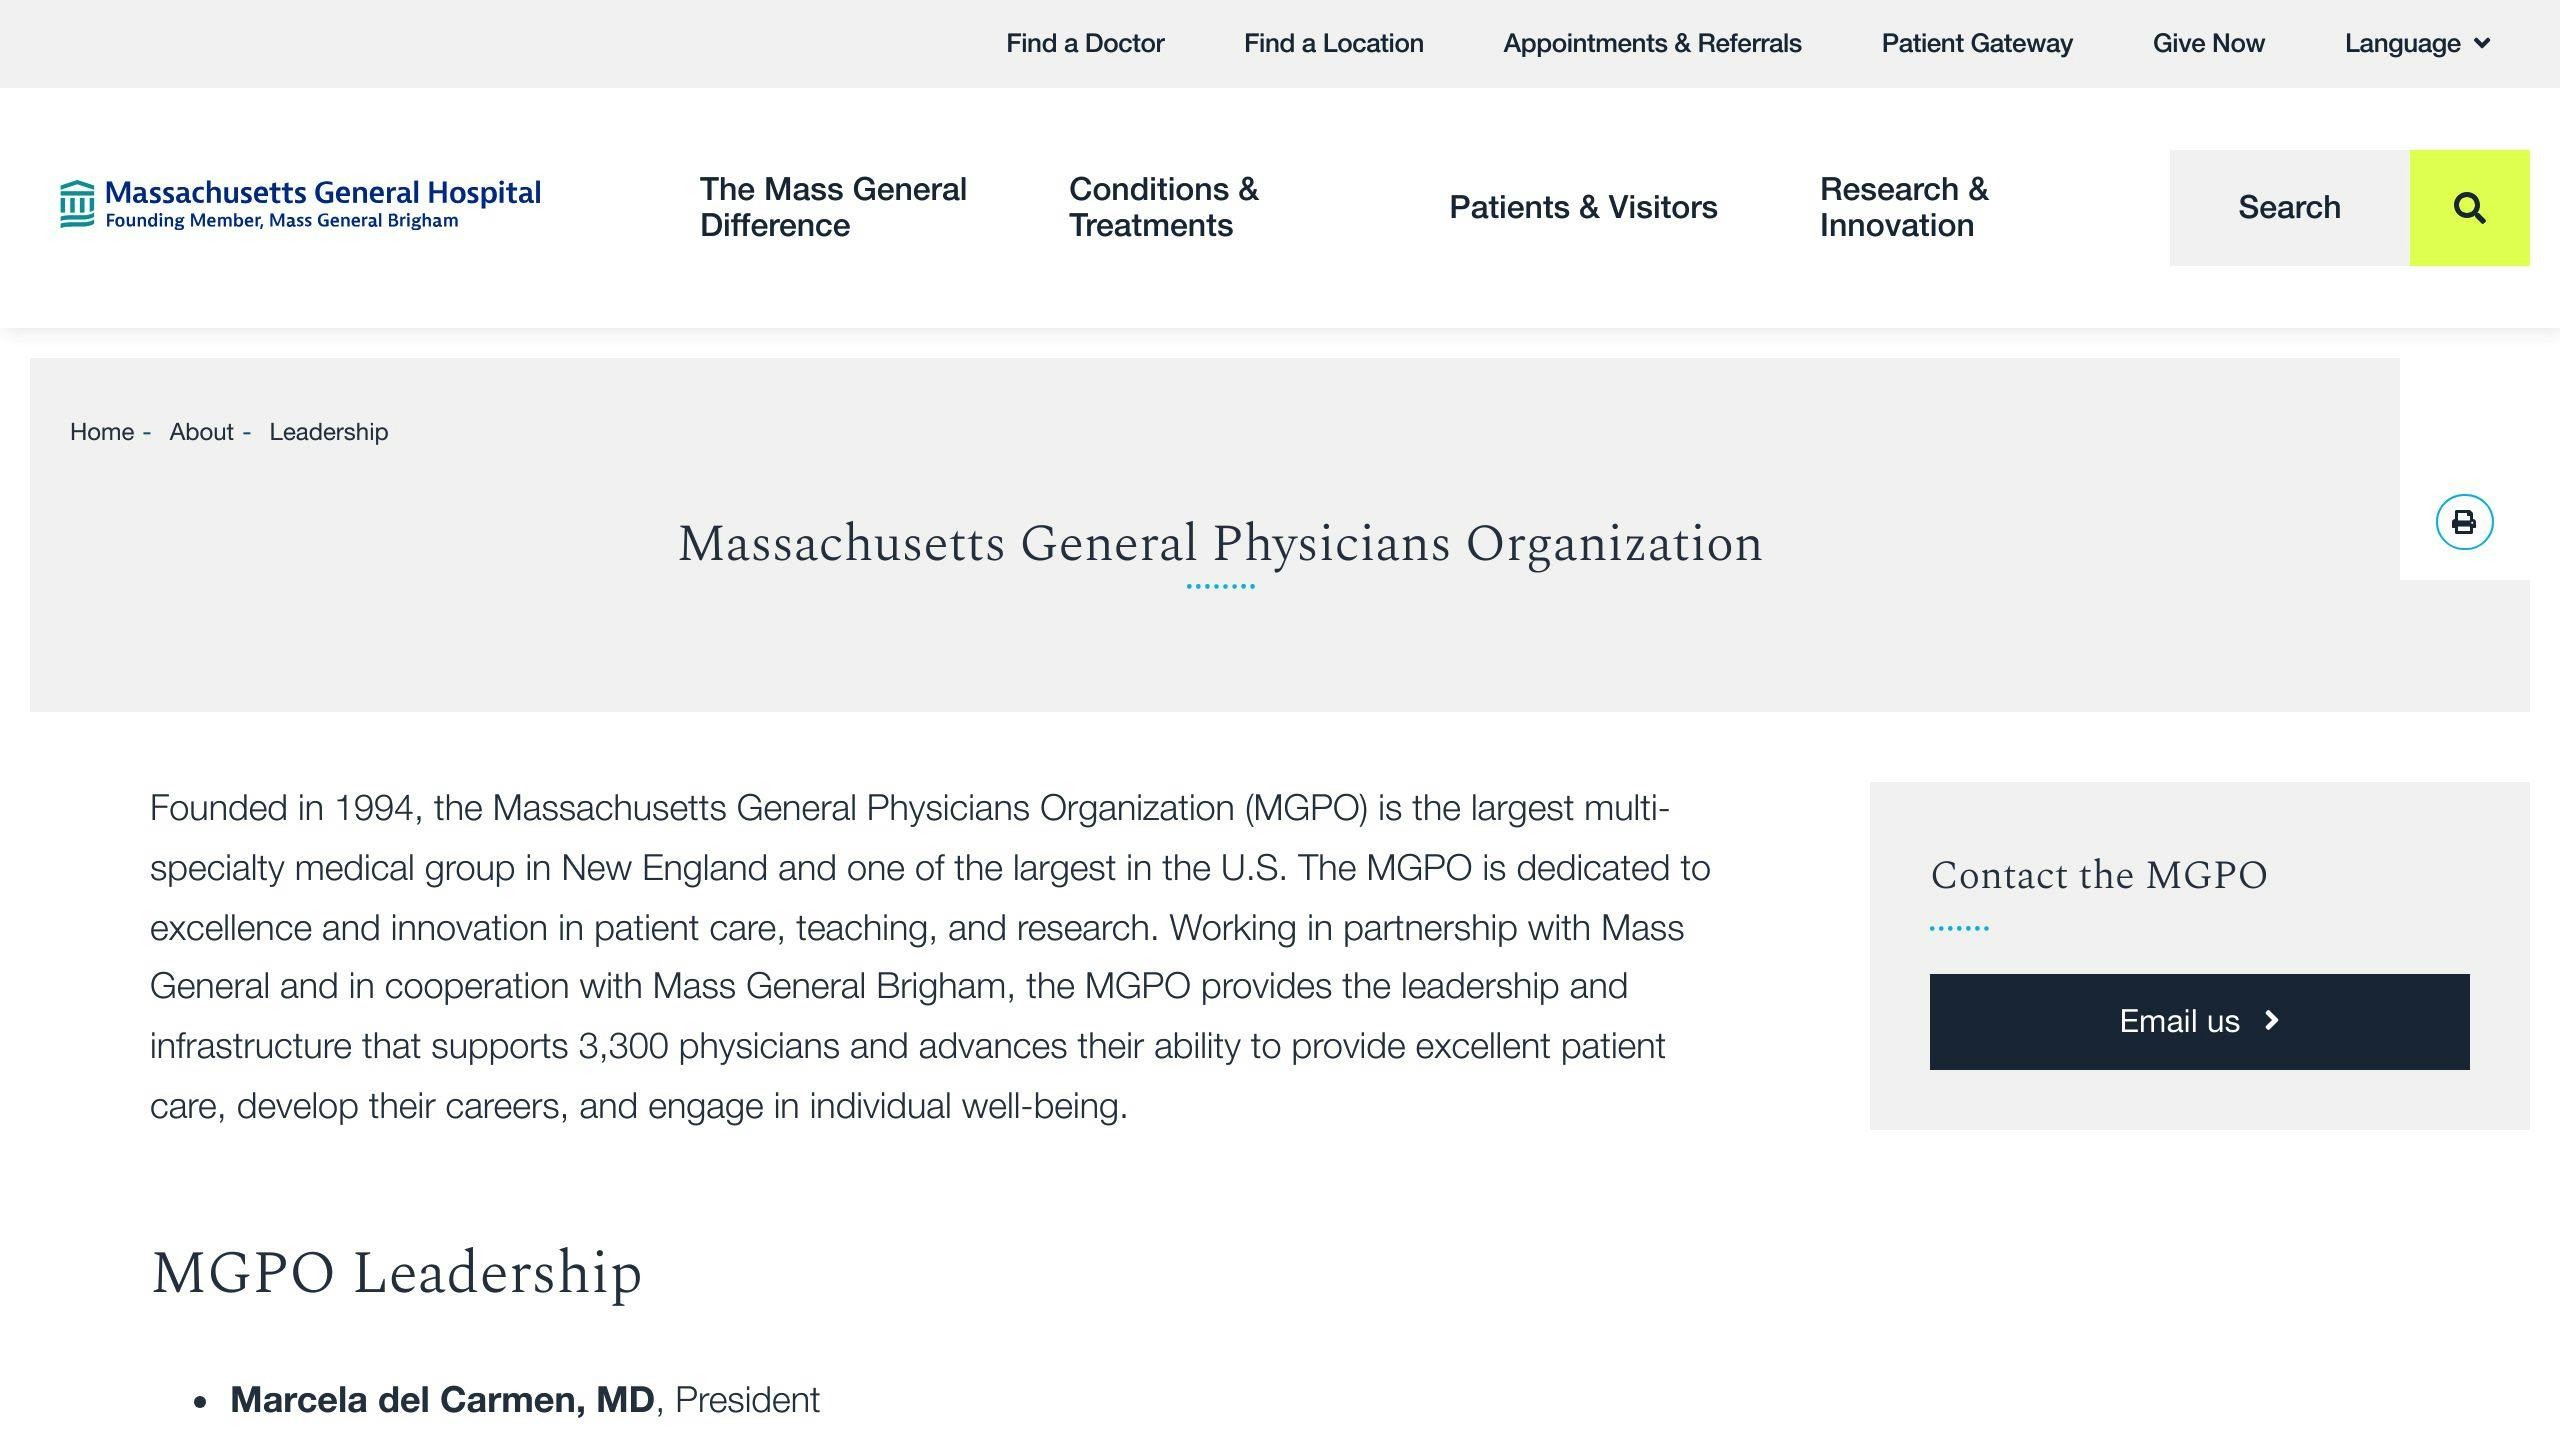 Massachusetts General Physicians Organization